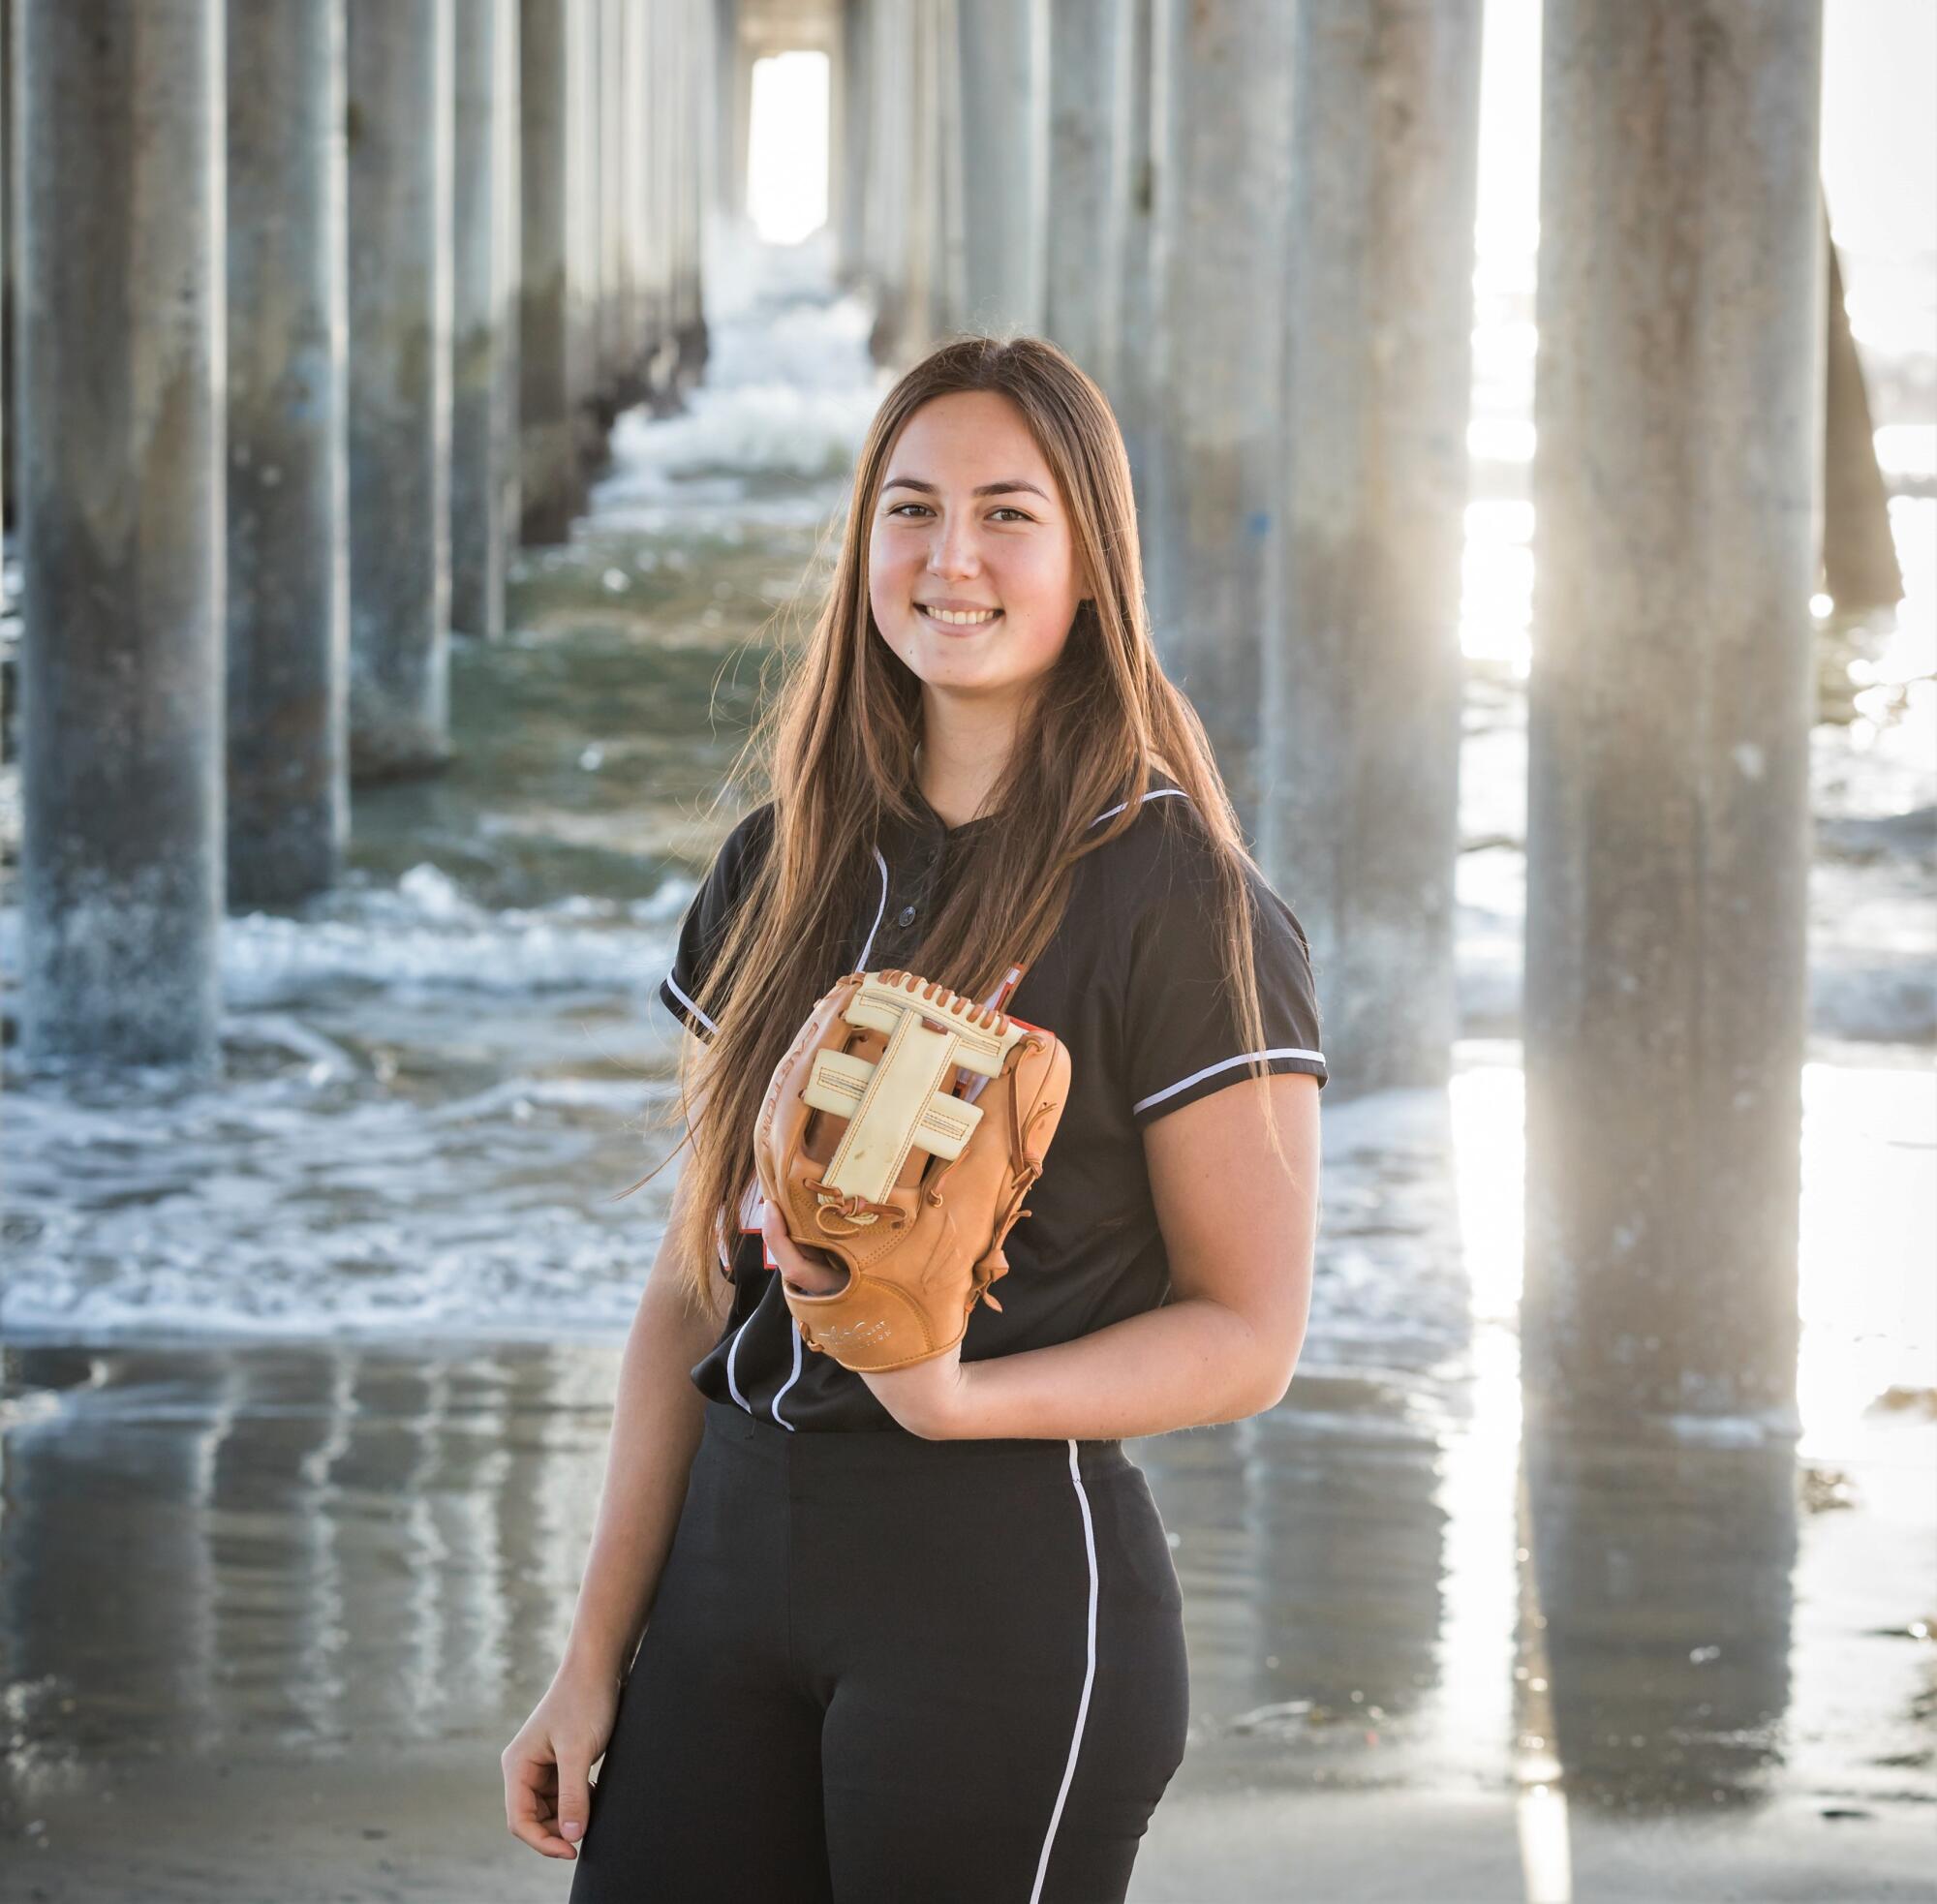 Huntington Beach High pitcher Zoe Prystajko poses for a photo at the pier.